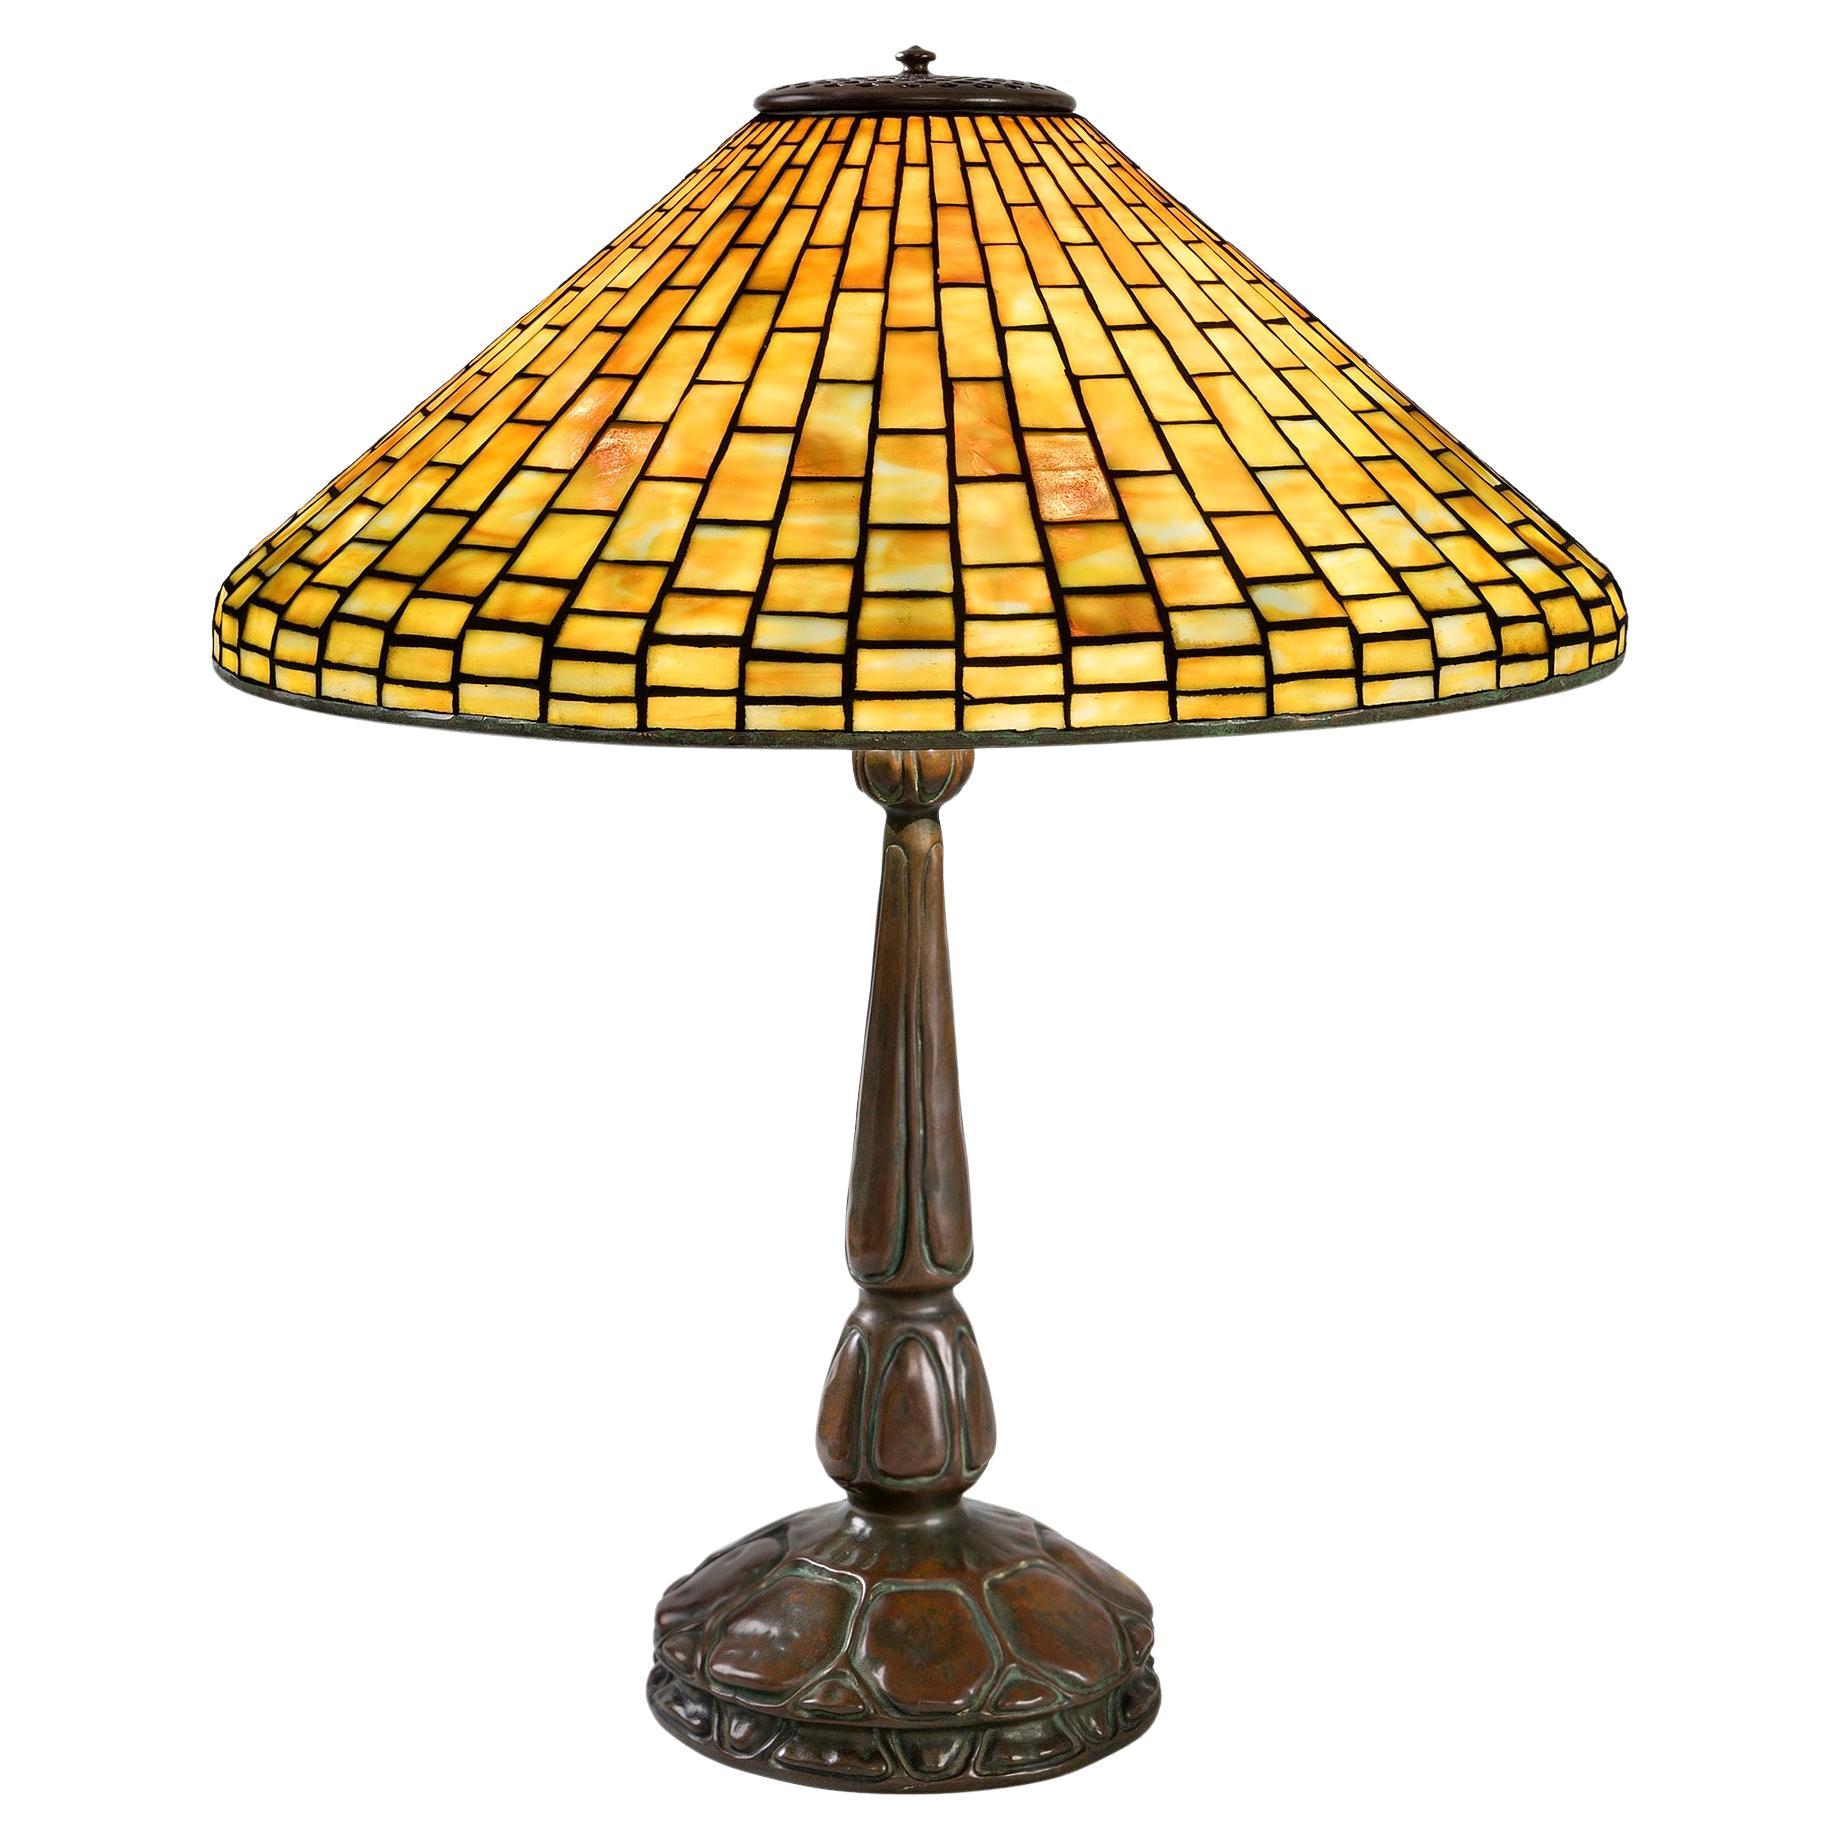 Tiffany Studios New York "Plain Squares" Table Lamp